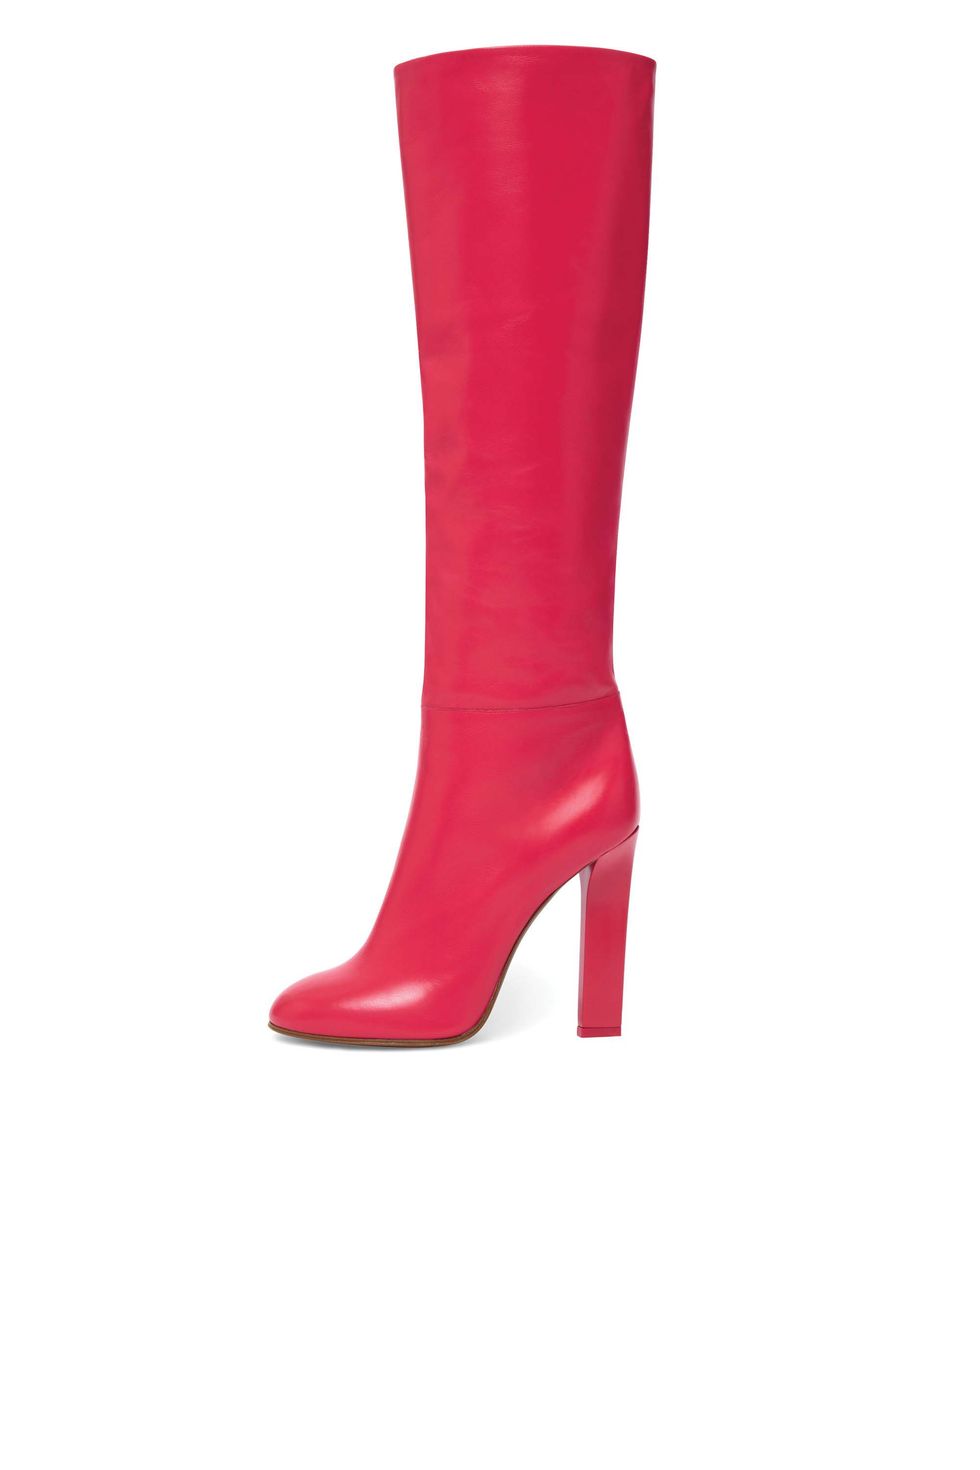 Footwear, Boot, Red, Knee-high boot, High heels, Shoe, Rain boot, Magenta, Leg, Riding boot, 